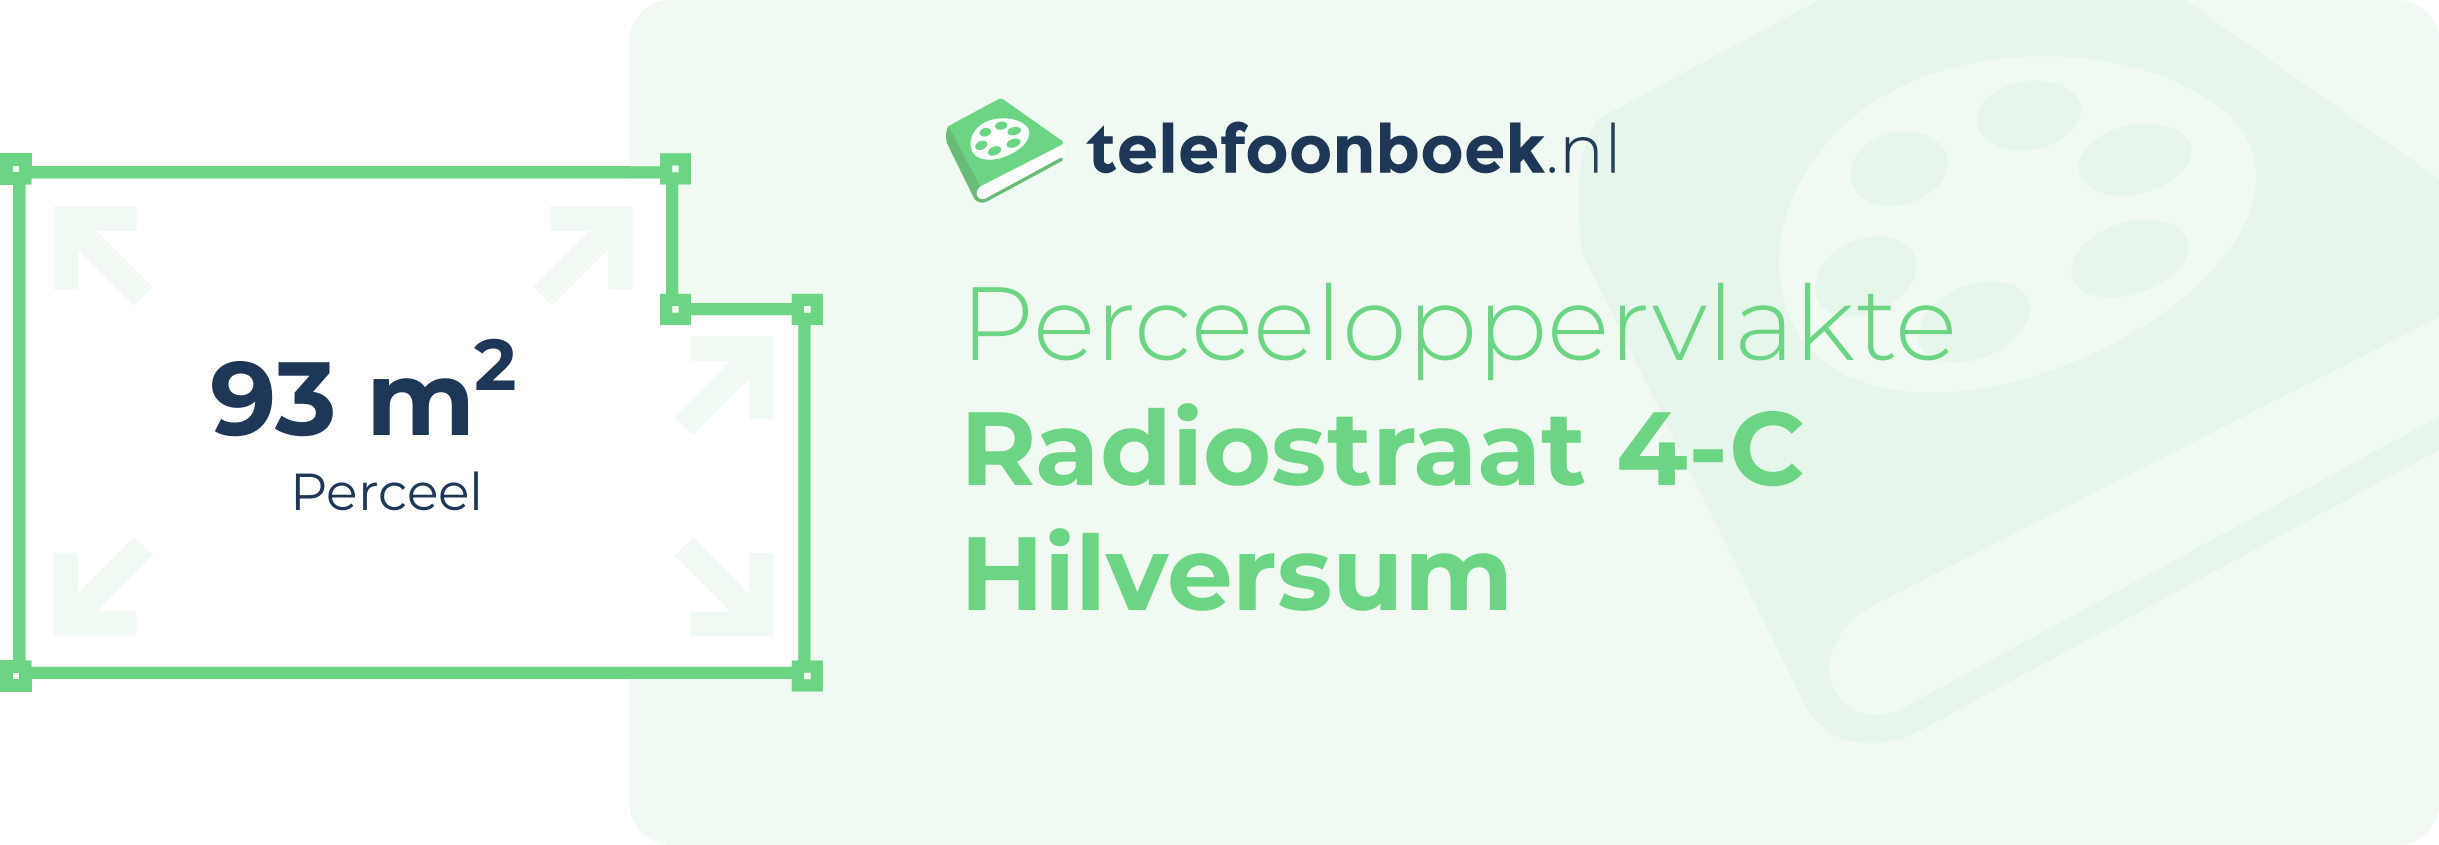 Perceeloppervlakte Radiostraat 4-C Hilversum